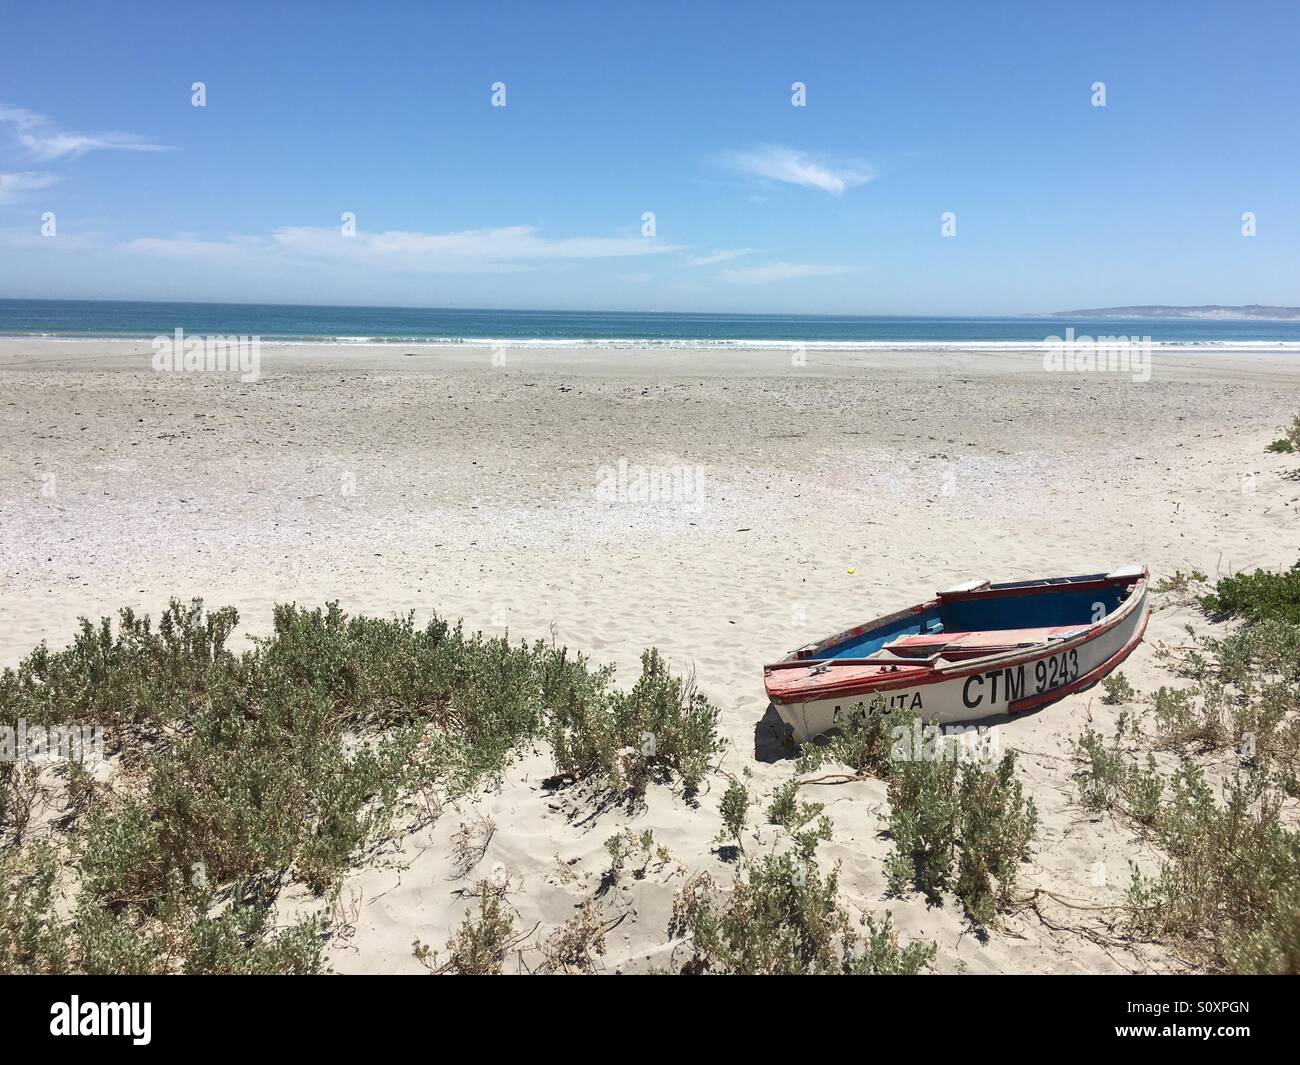 Barco de la playa Foto de stock